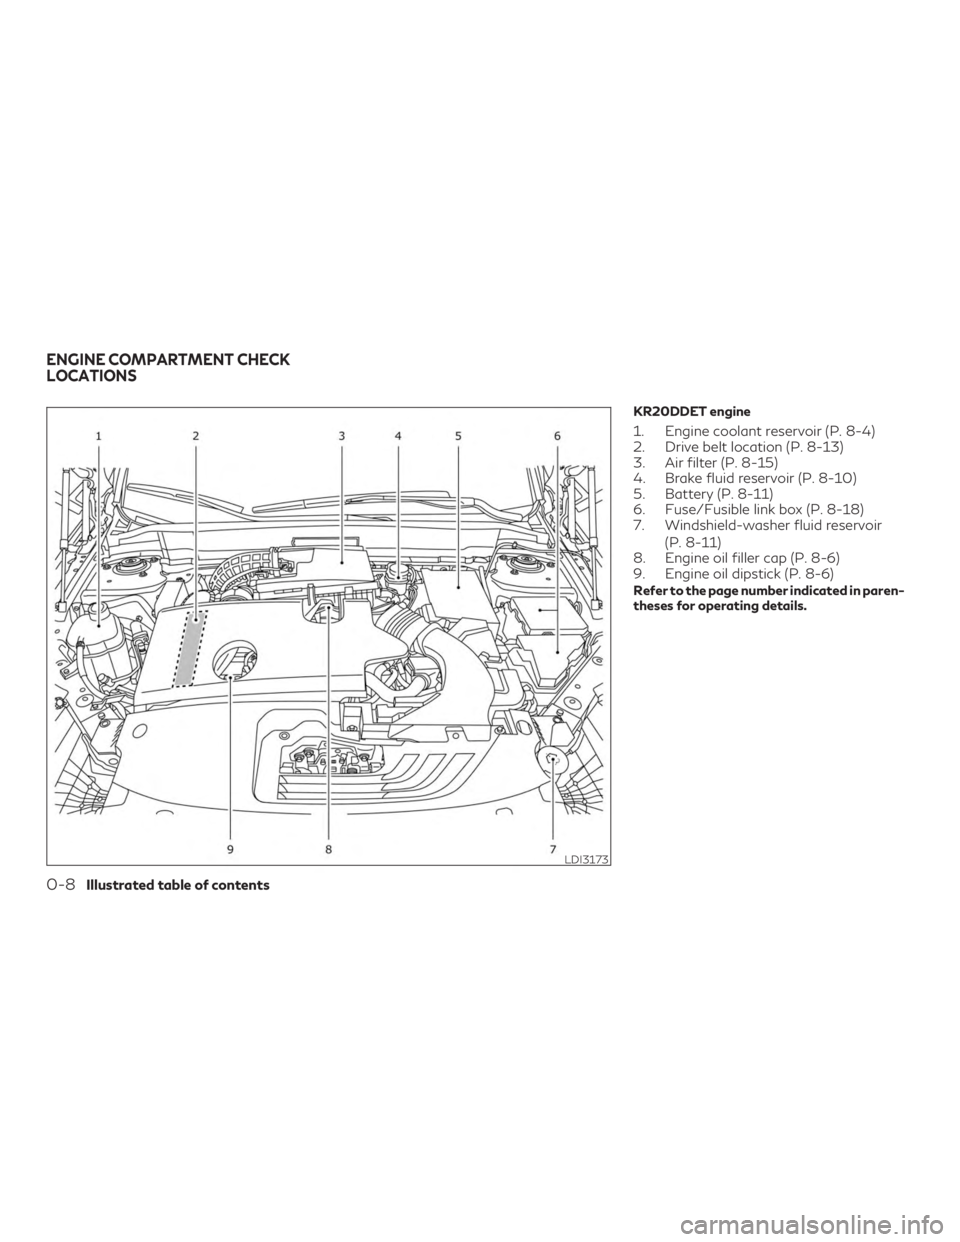 INFINITI QX50 2020  Owners Manual KR20DDET engine
1. Engine coolant reservoir (P. 8-4)
2. Drive belt location (P. 8-13)
3. Air filter (P. 8-15)
4. Brake fluid reservoir (P. 8-10)
5. Battery (P. 8-11)
6. Fuse/Fusible link box (P. 8-18)